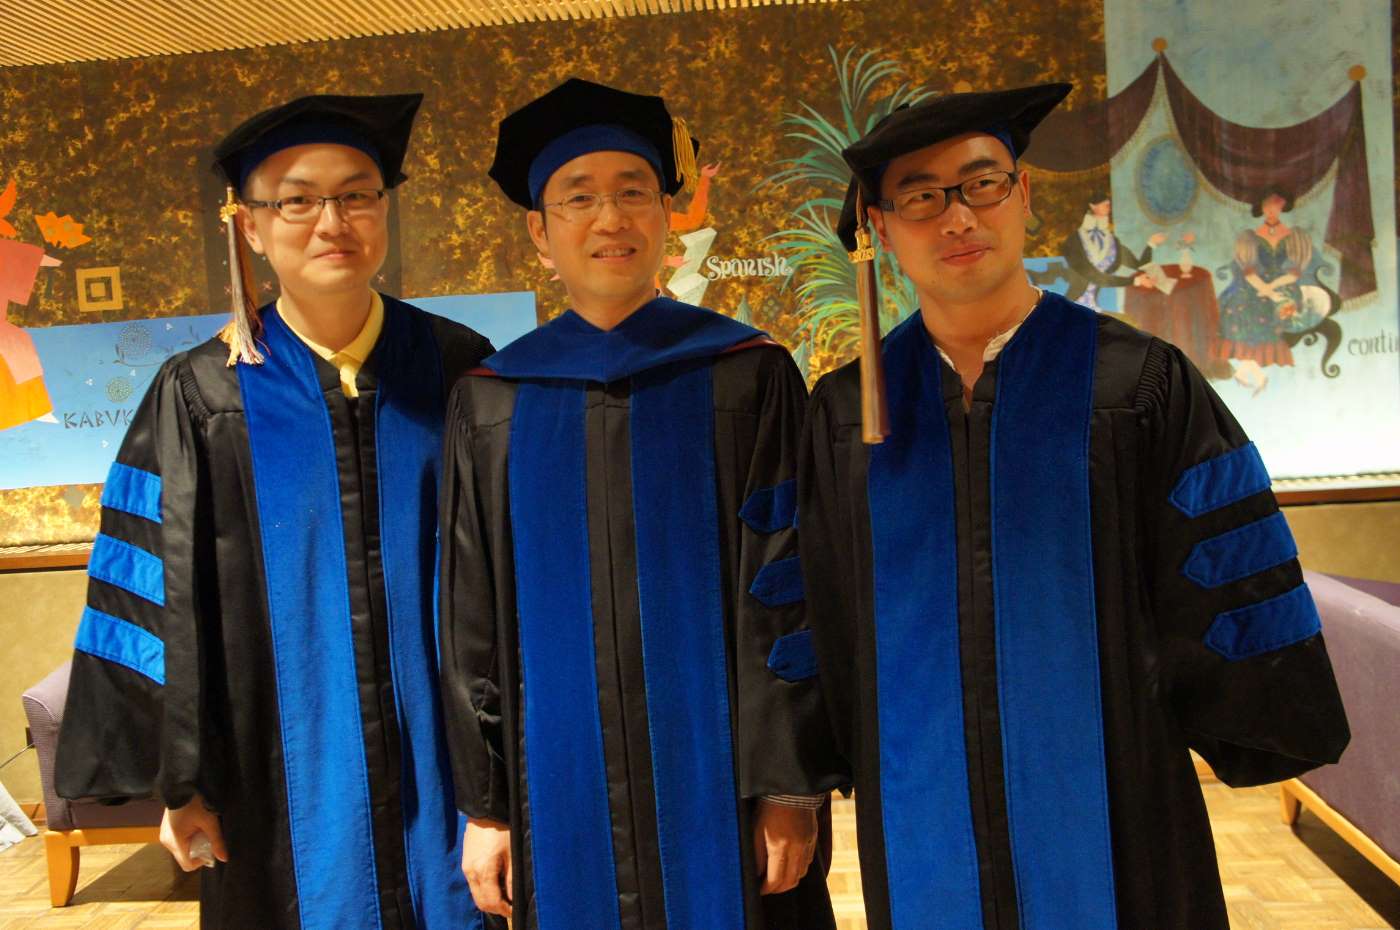 Xi and Xiangsheng Graduation Ceremony - 2013